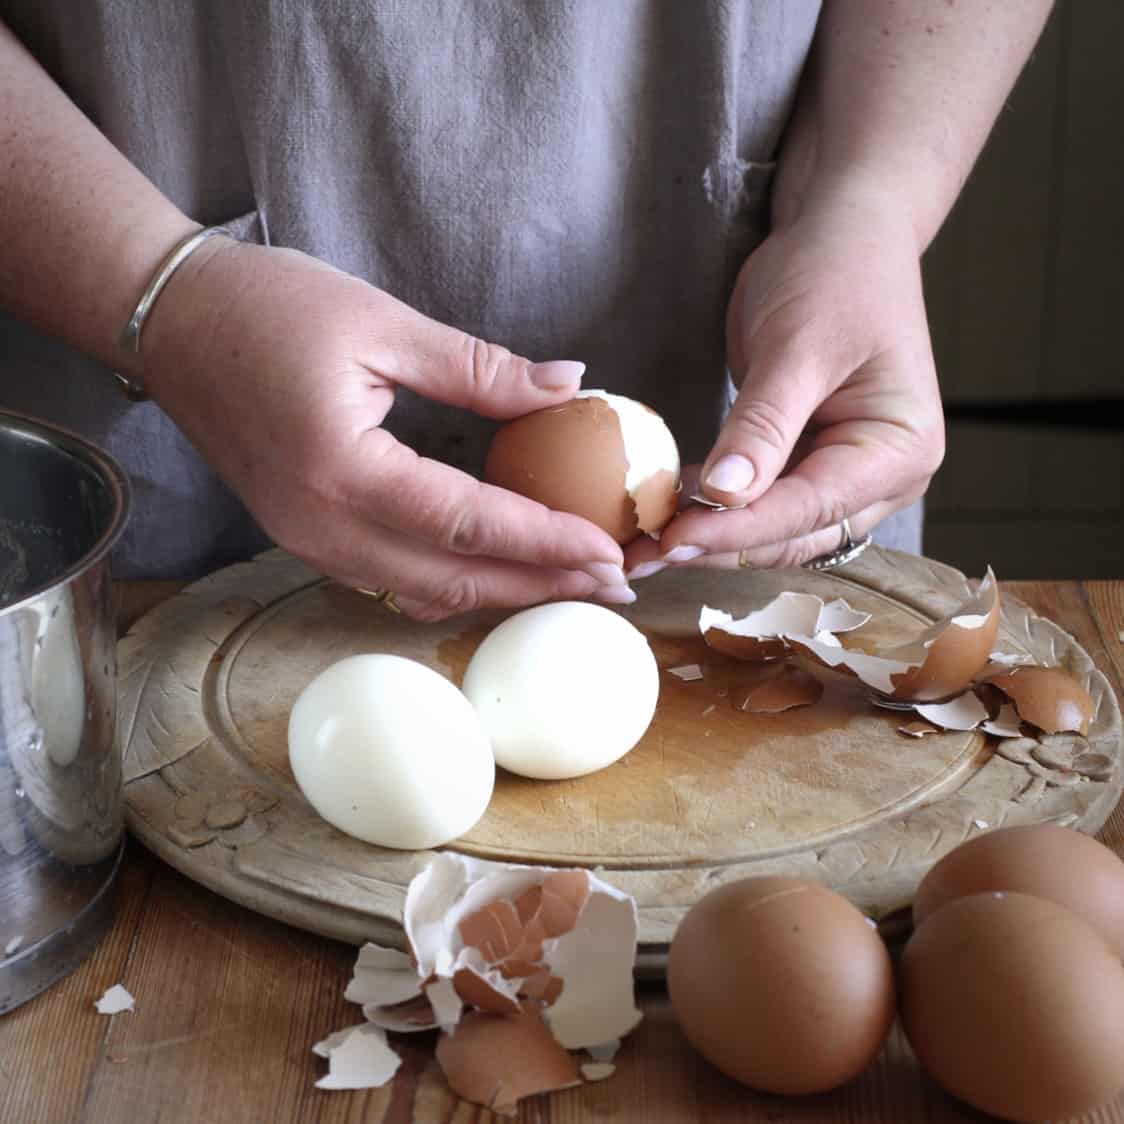 Woman peeling three hard boiled eggs on a rustic wooden chopping board